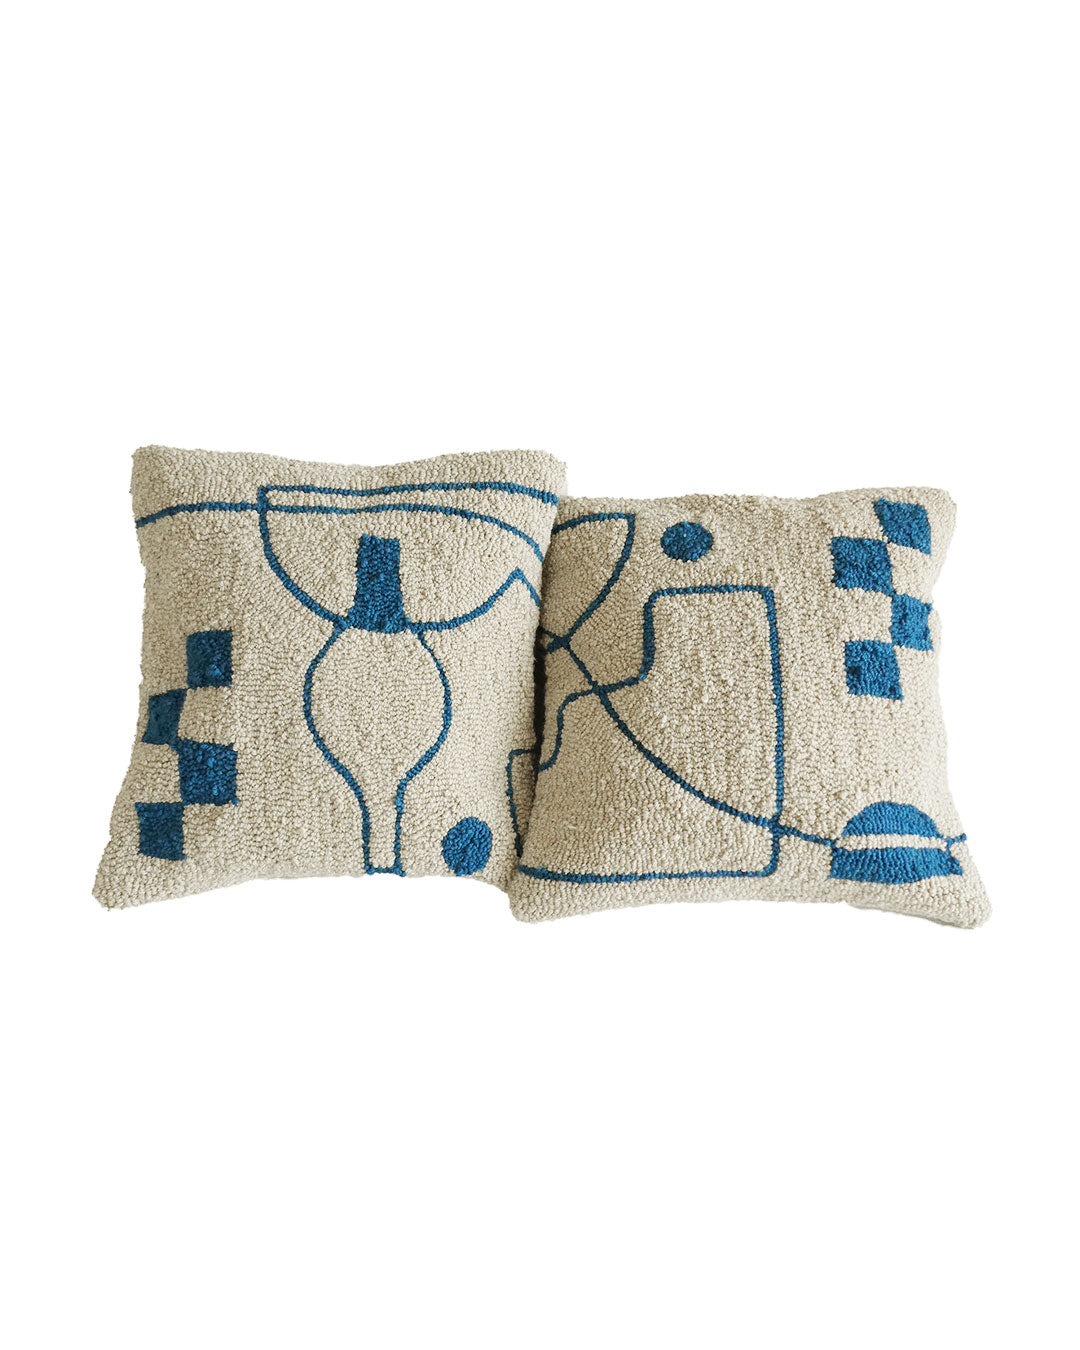 Umi Tufted Cushion Covers - Set of 2- Ito